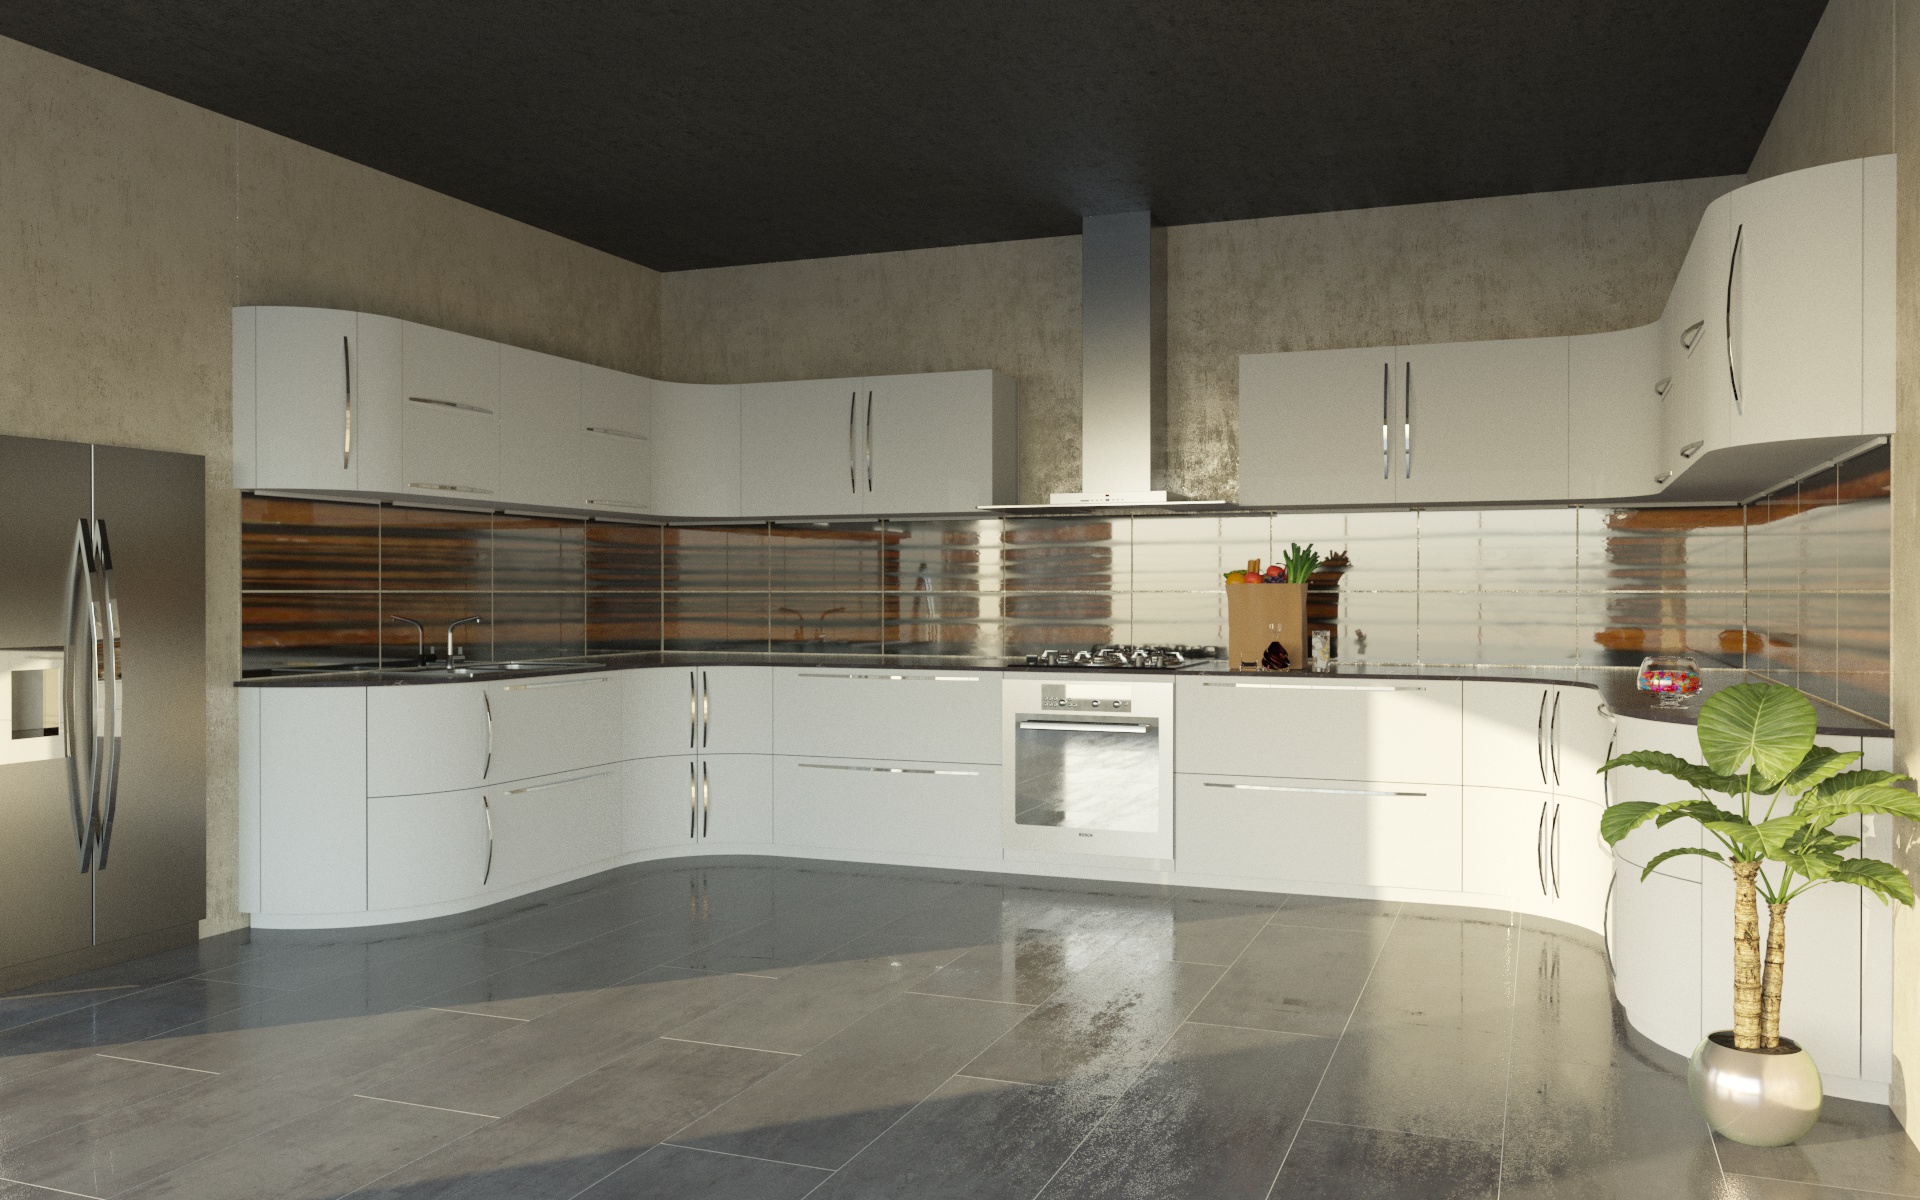 Kitchen in Cinema 4d corona render image